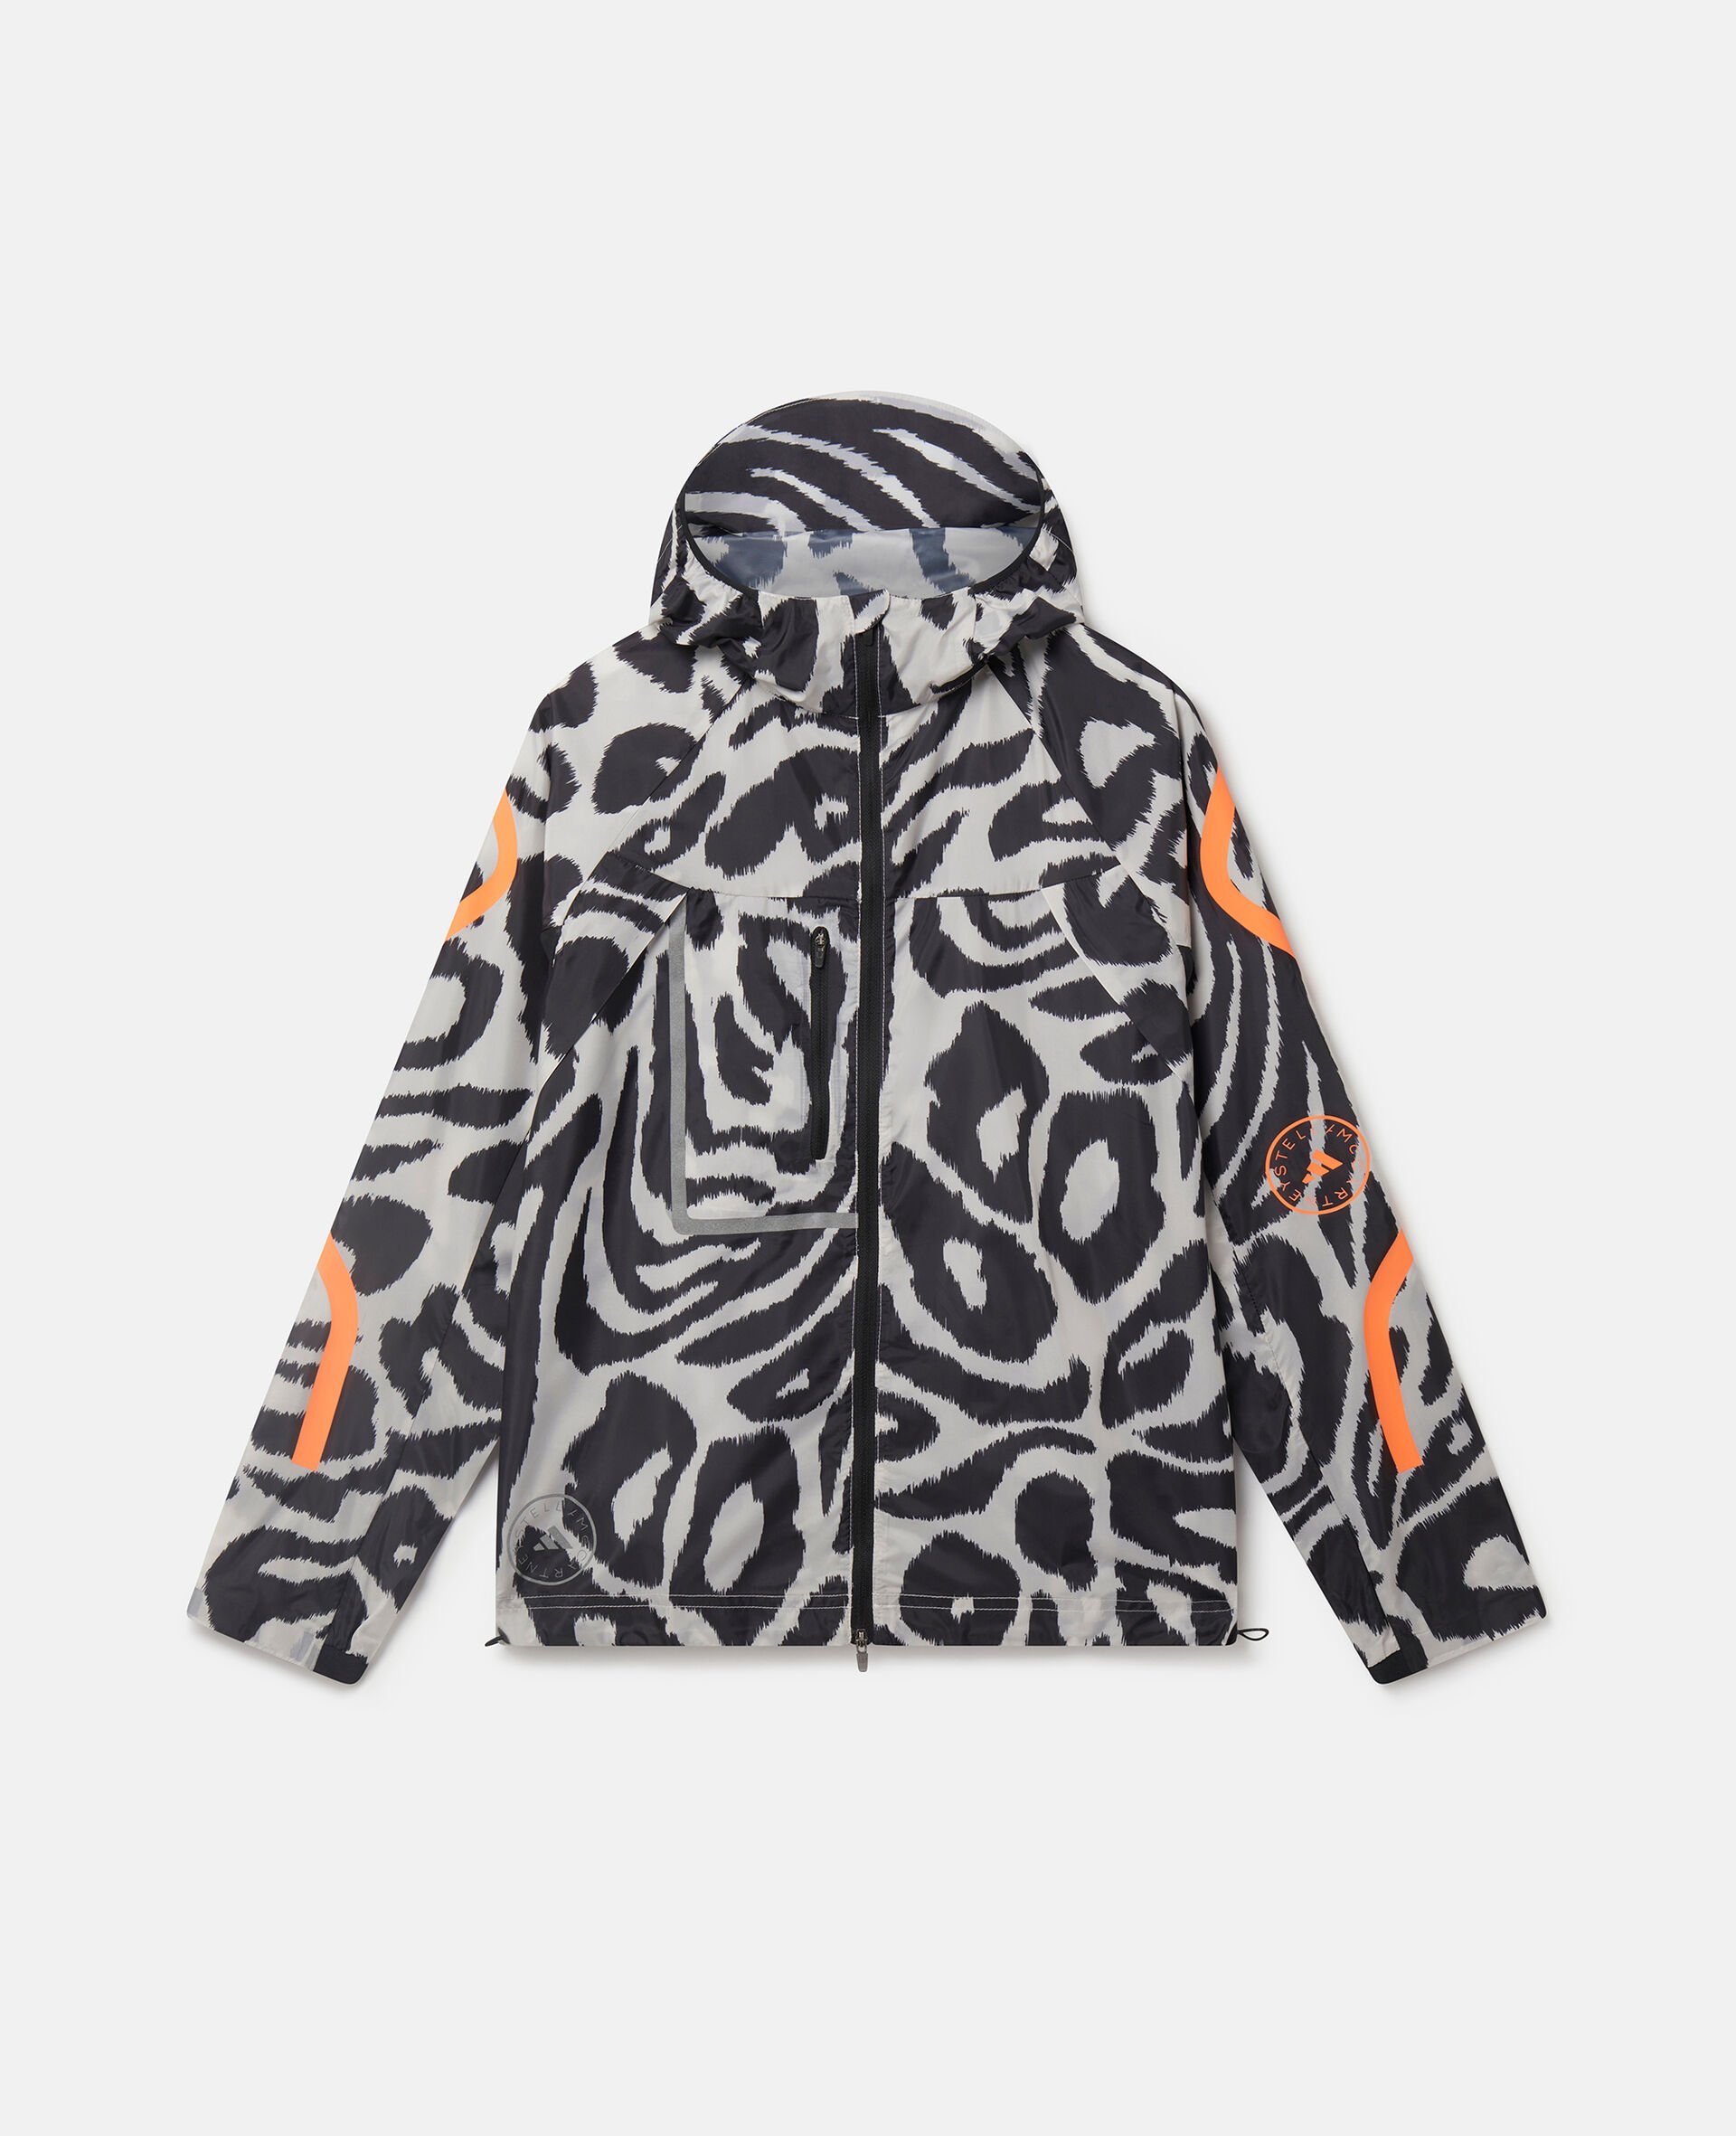 TruePace Leopard Print Running Jacket-Multicolour-large image number 0